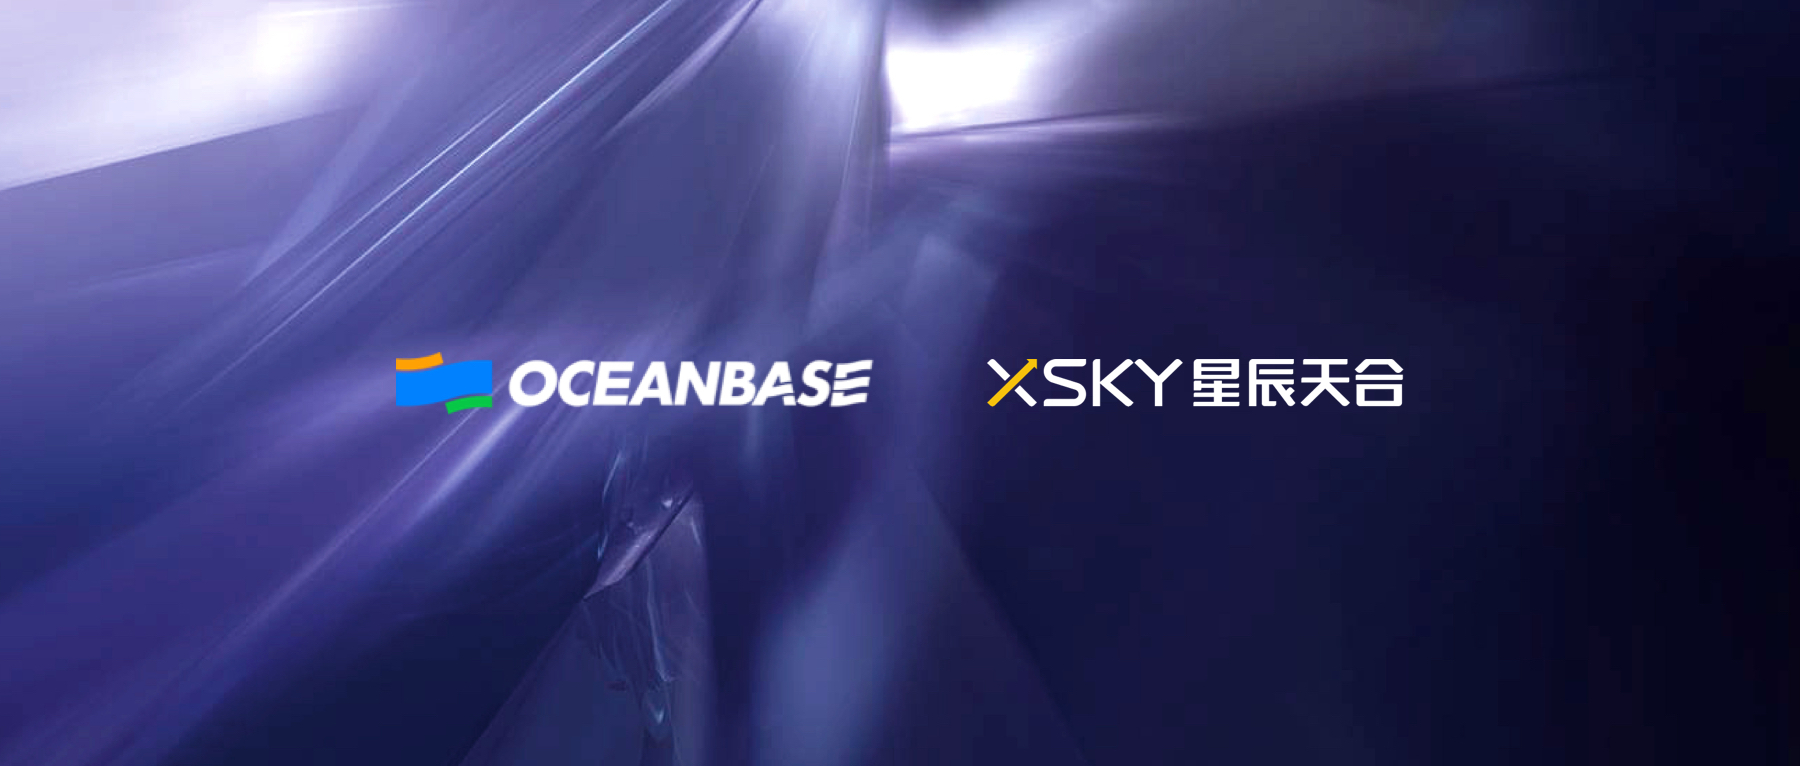 XSKY SDS 产品率先获得 OceanBase V4 新版本认证